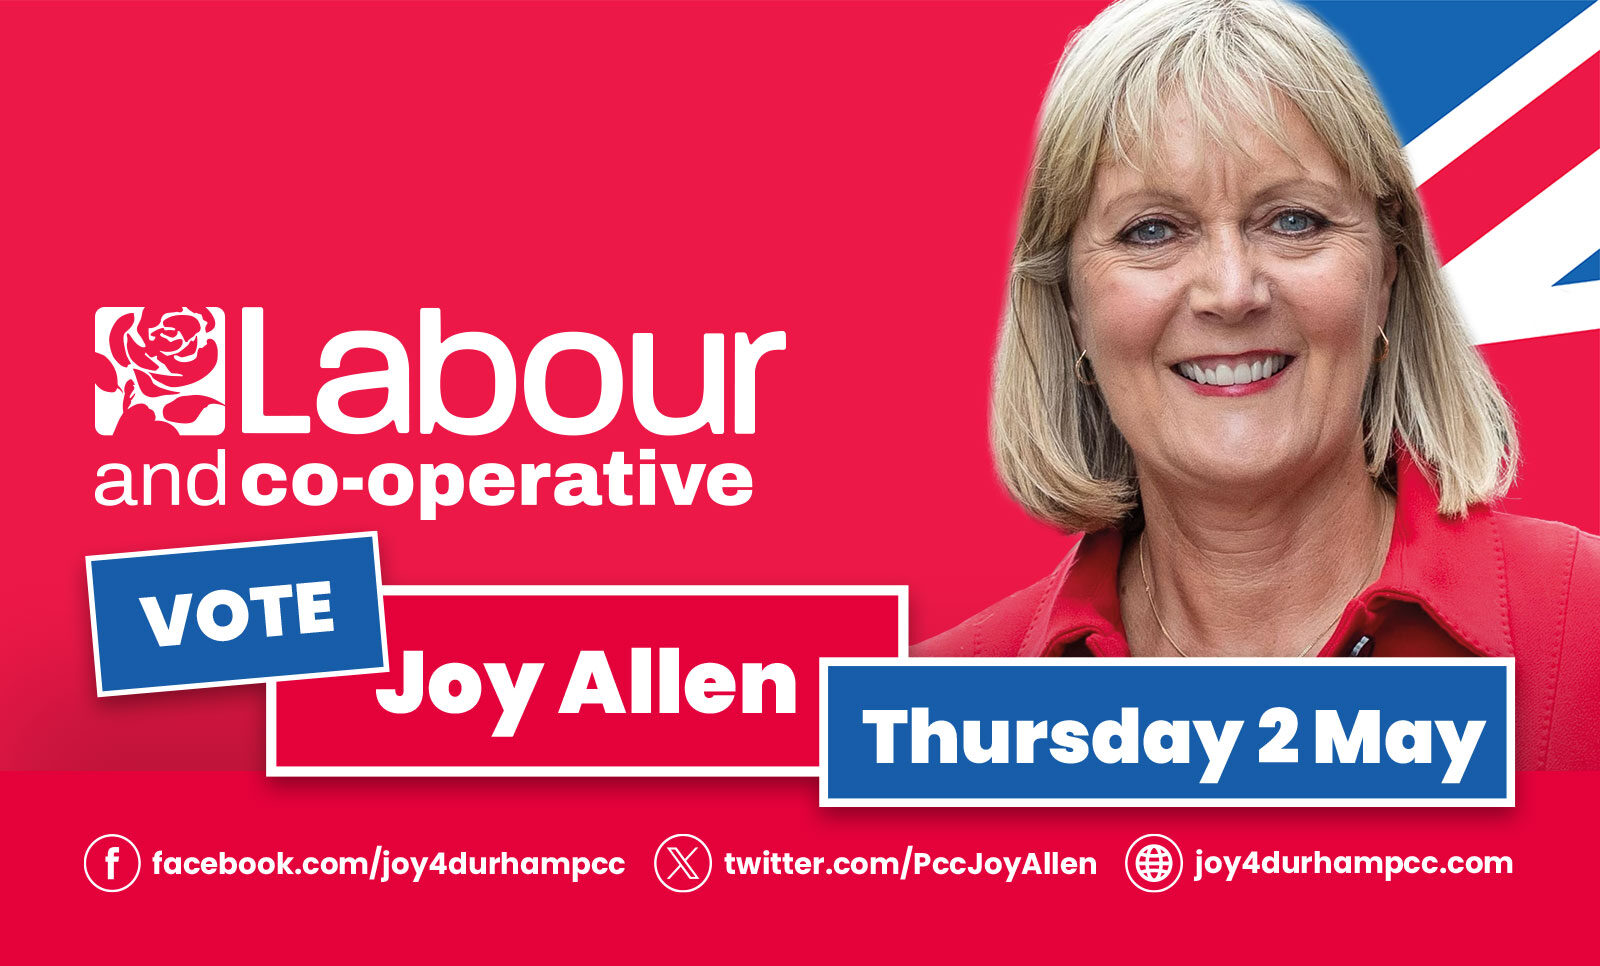 Vote Joy Allen on Thursday 2 May